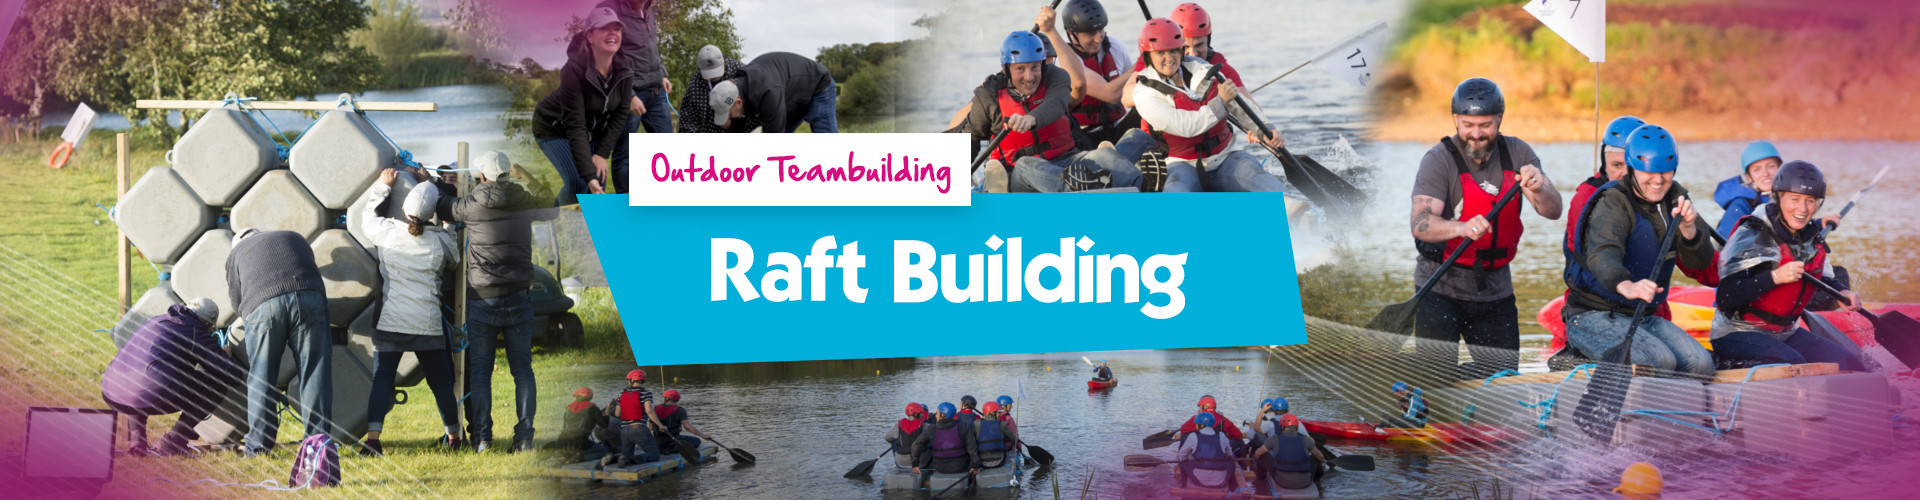 Raft Building Banner